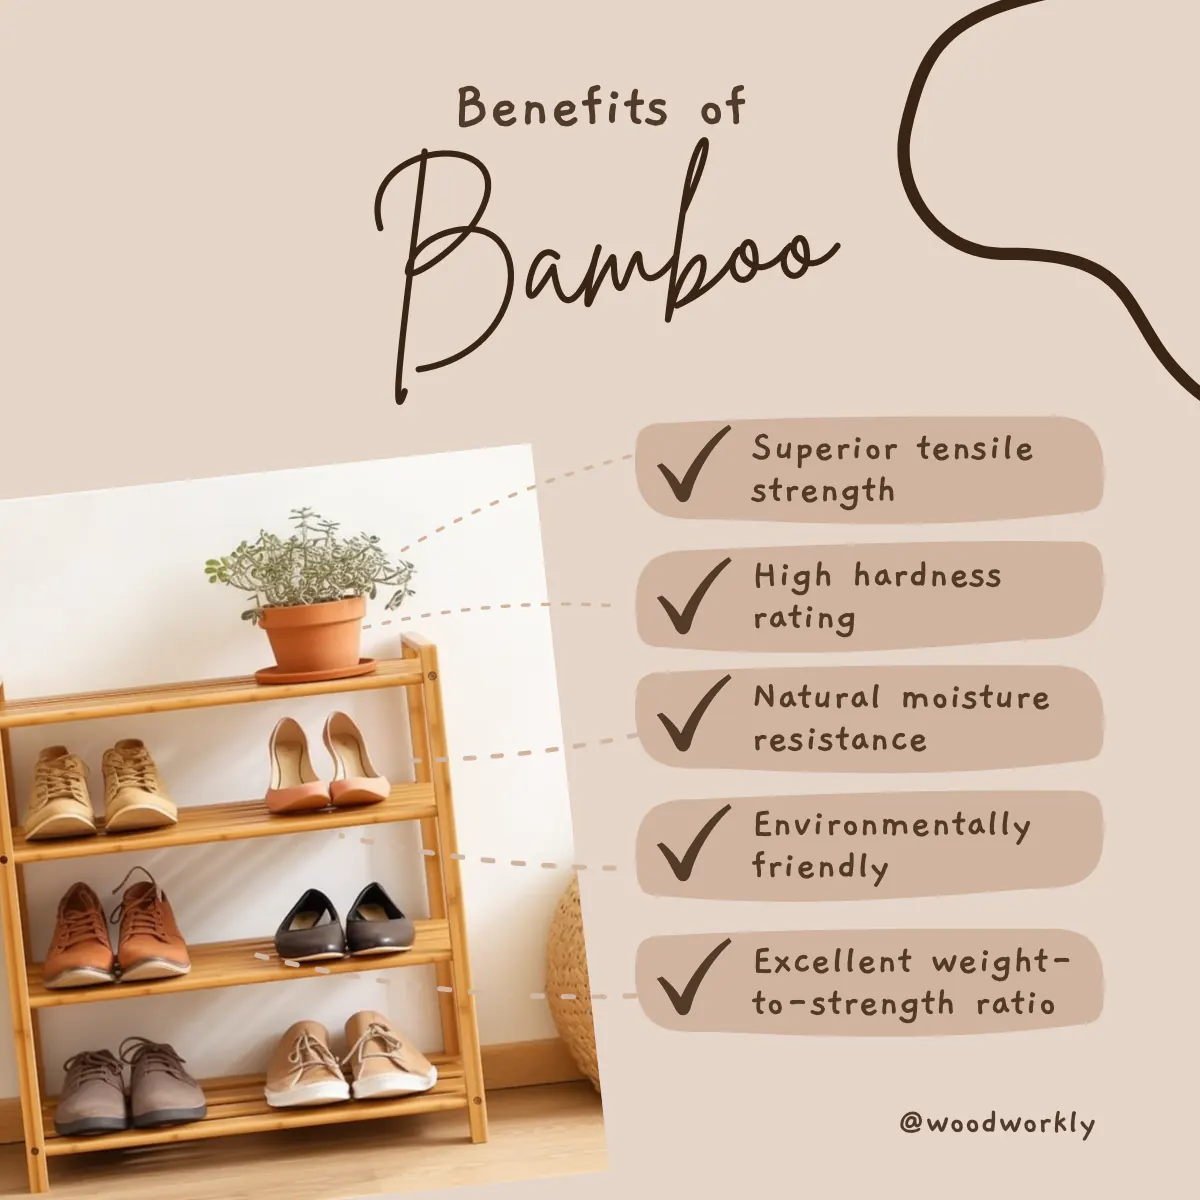 Benefits of bamboo